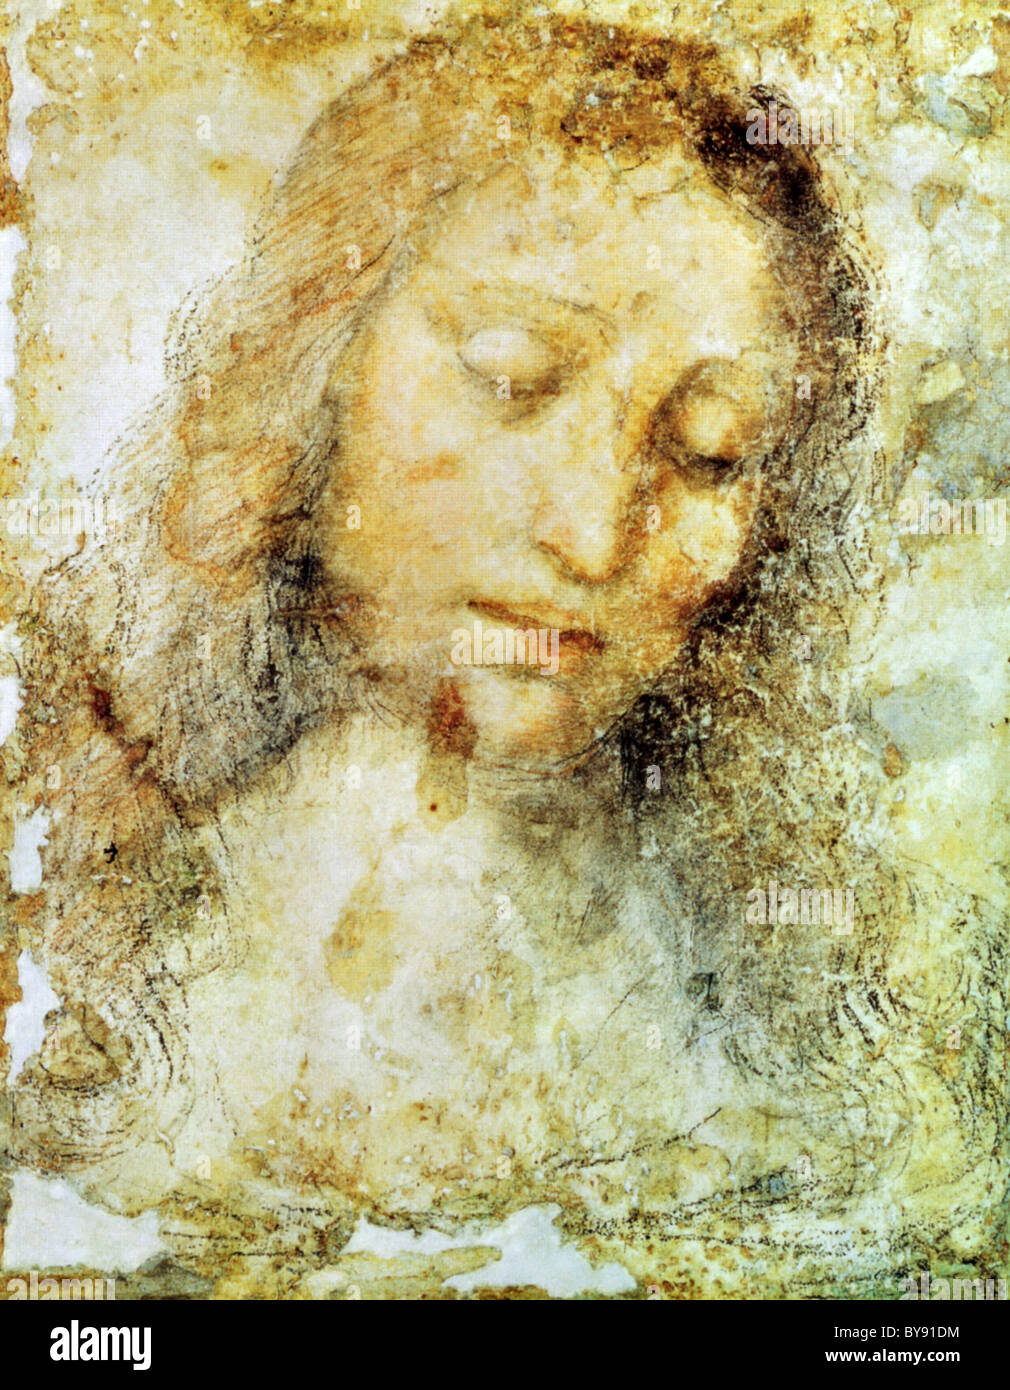 Head of Christ by Leonardo da Vinci. Stock Photo